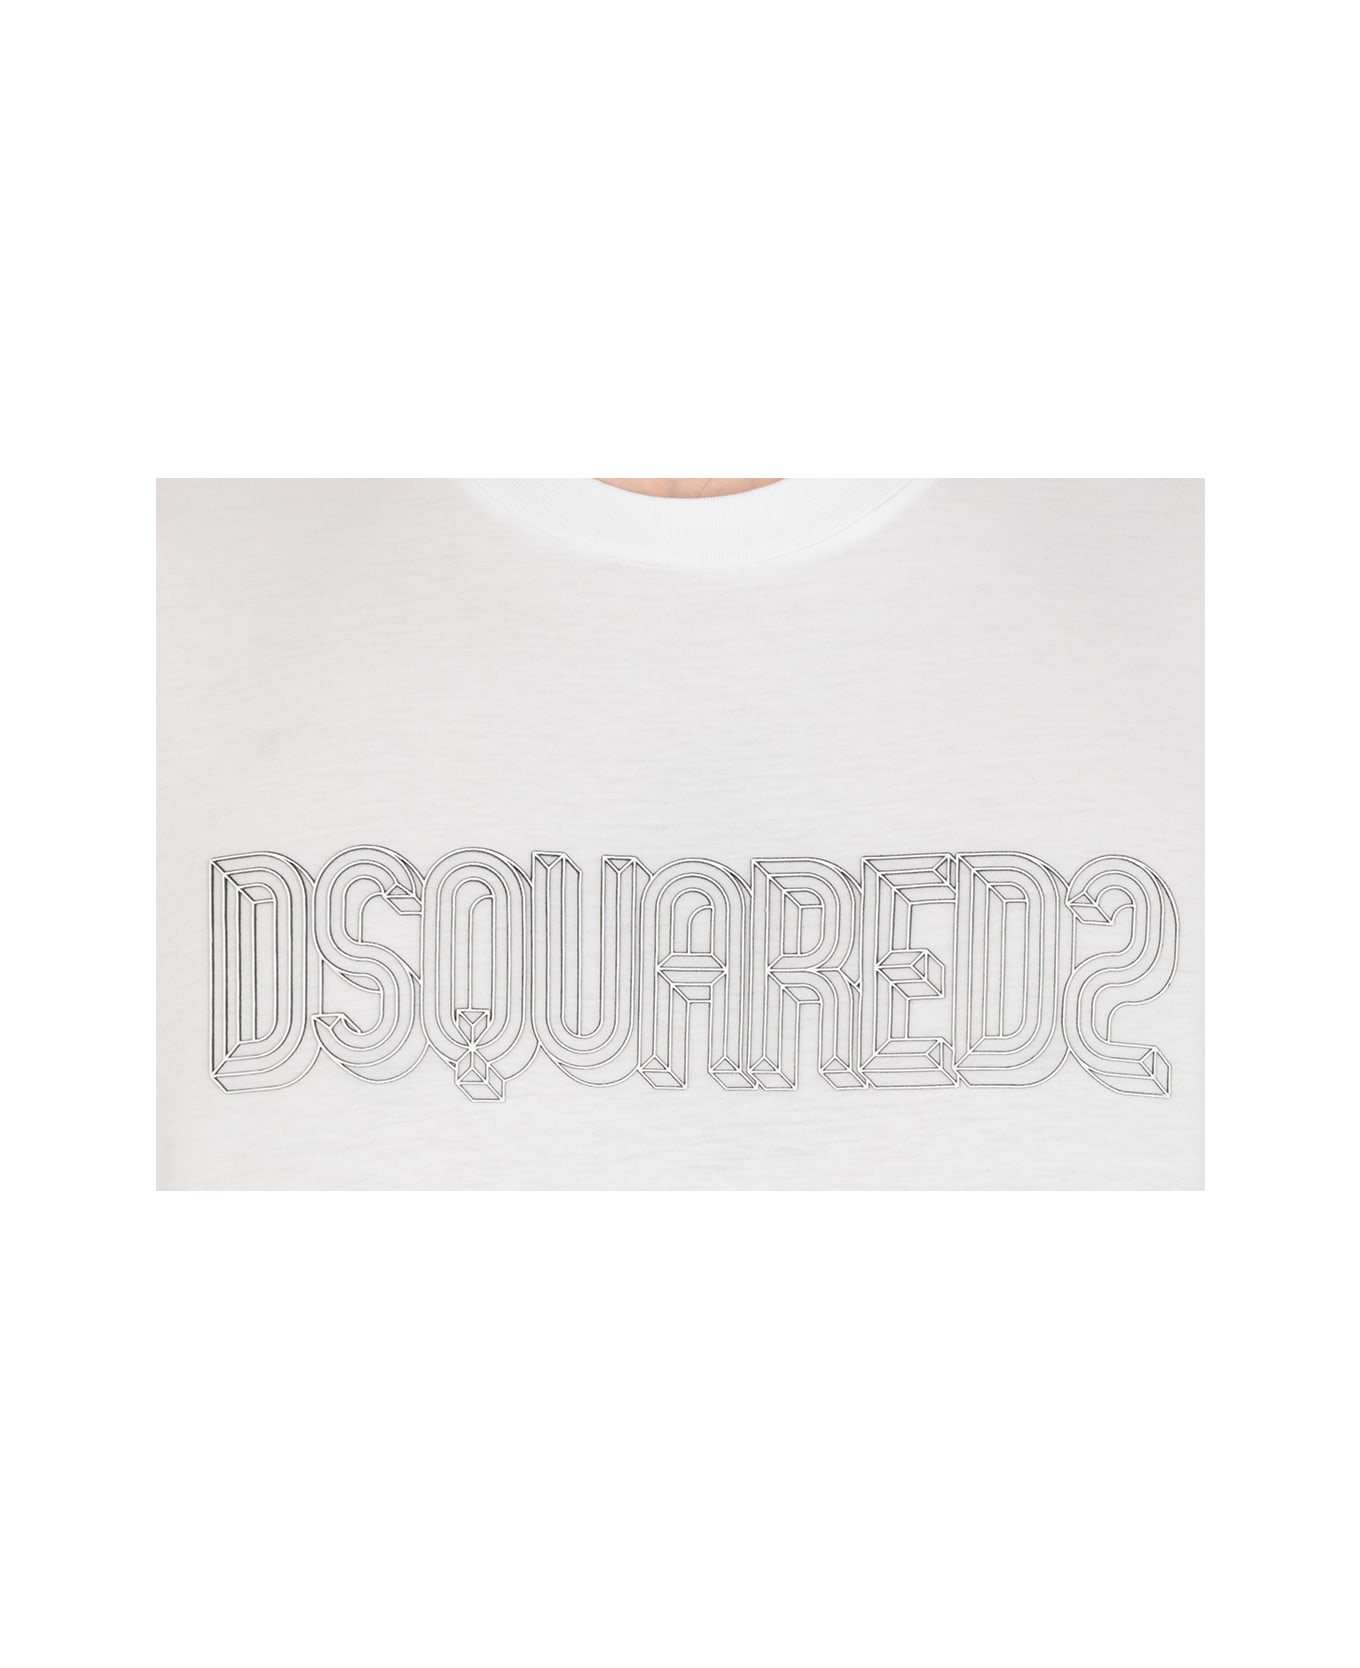 Dsquared2 Logo Cotton T-shirt - White